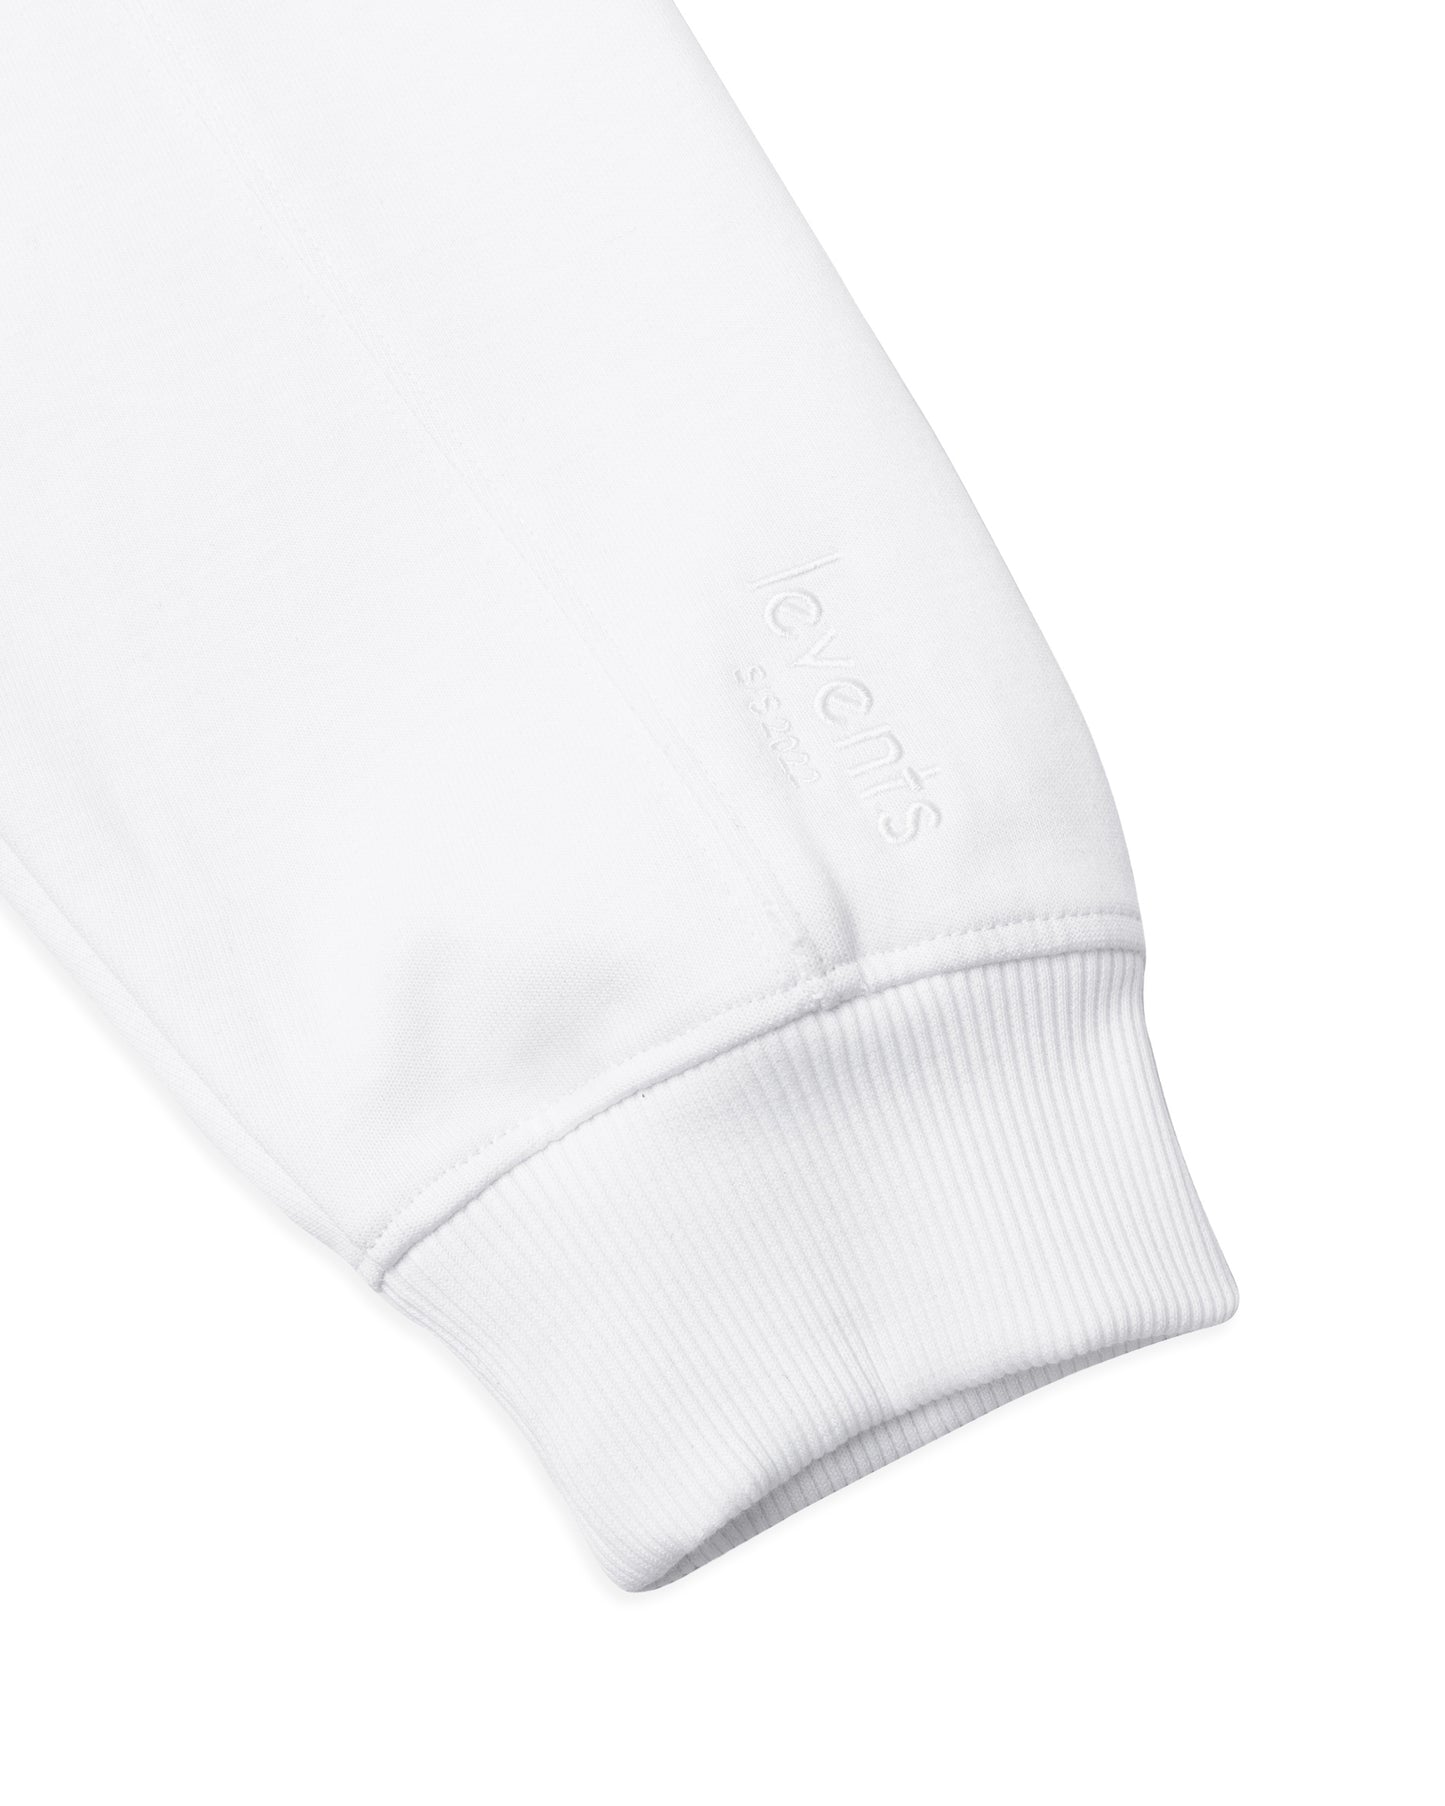 Levents® Mini Logo Zipper Hoodie/ White